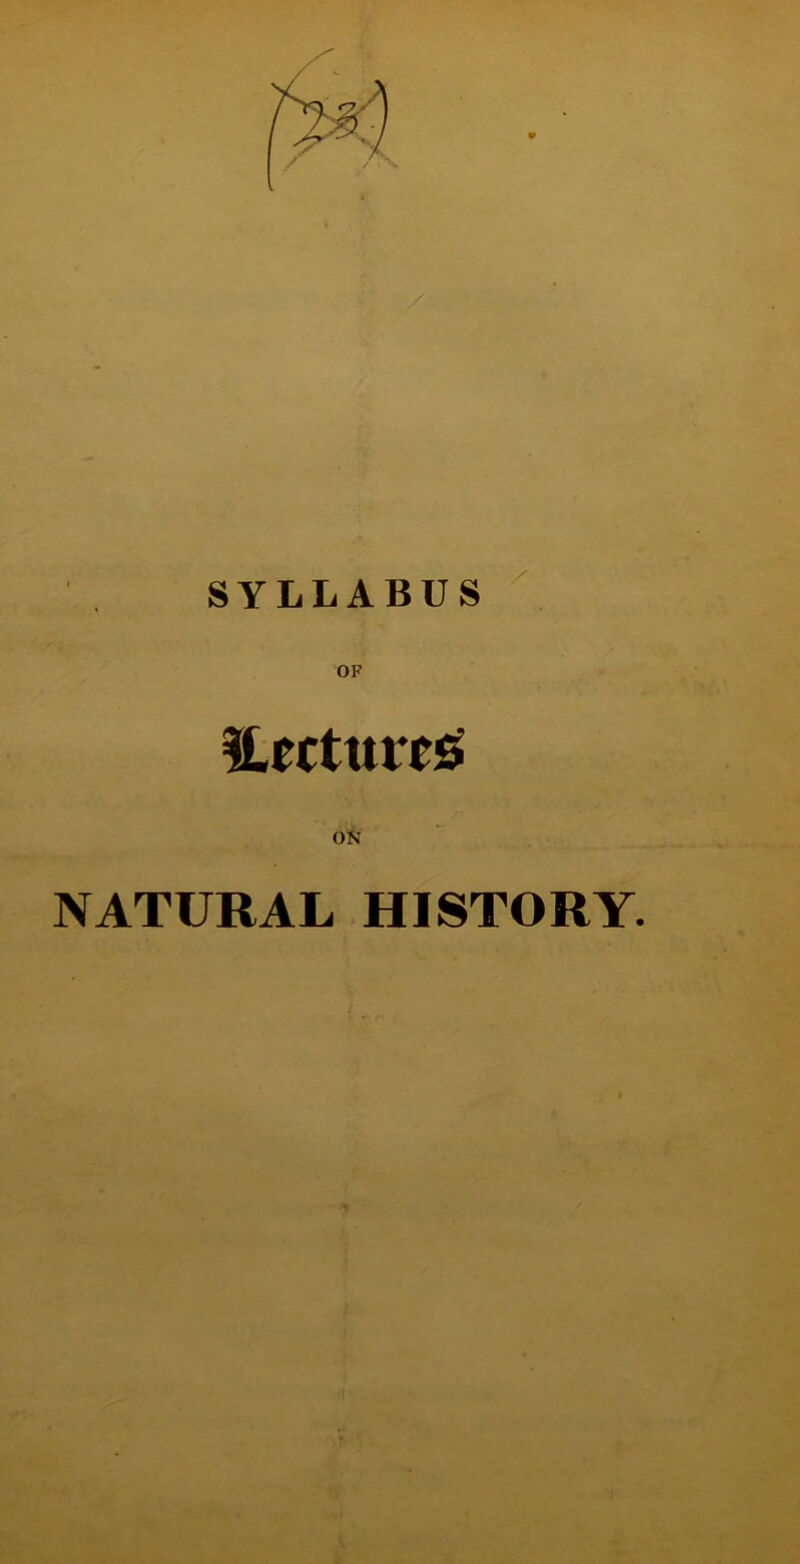 SYLLABUS ItrcturejS NATURAL HISTORY.